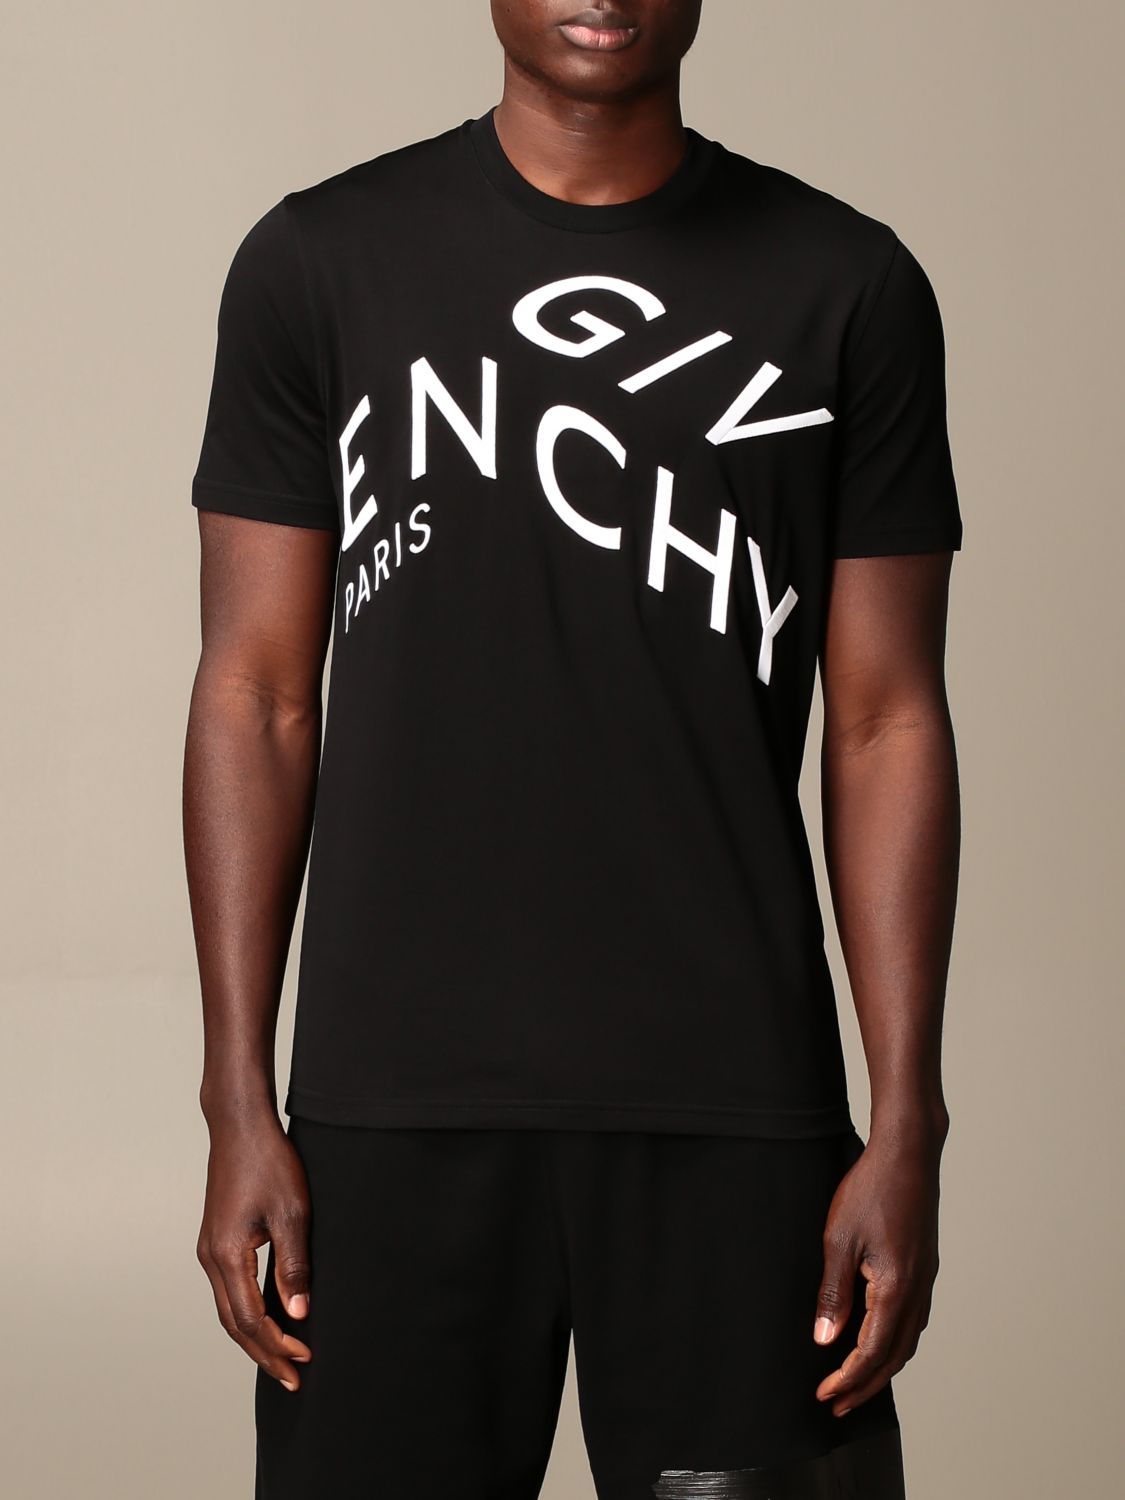 Givenchy T Shirt / GIVENCHY Givenchy Tape Logo T-shirt - Clothing from